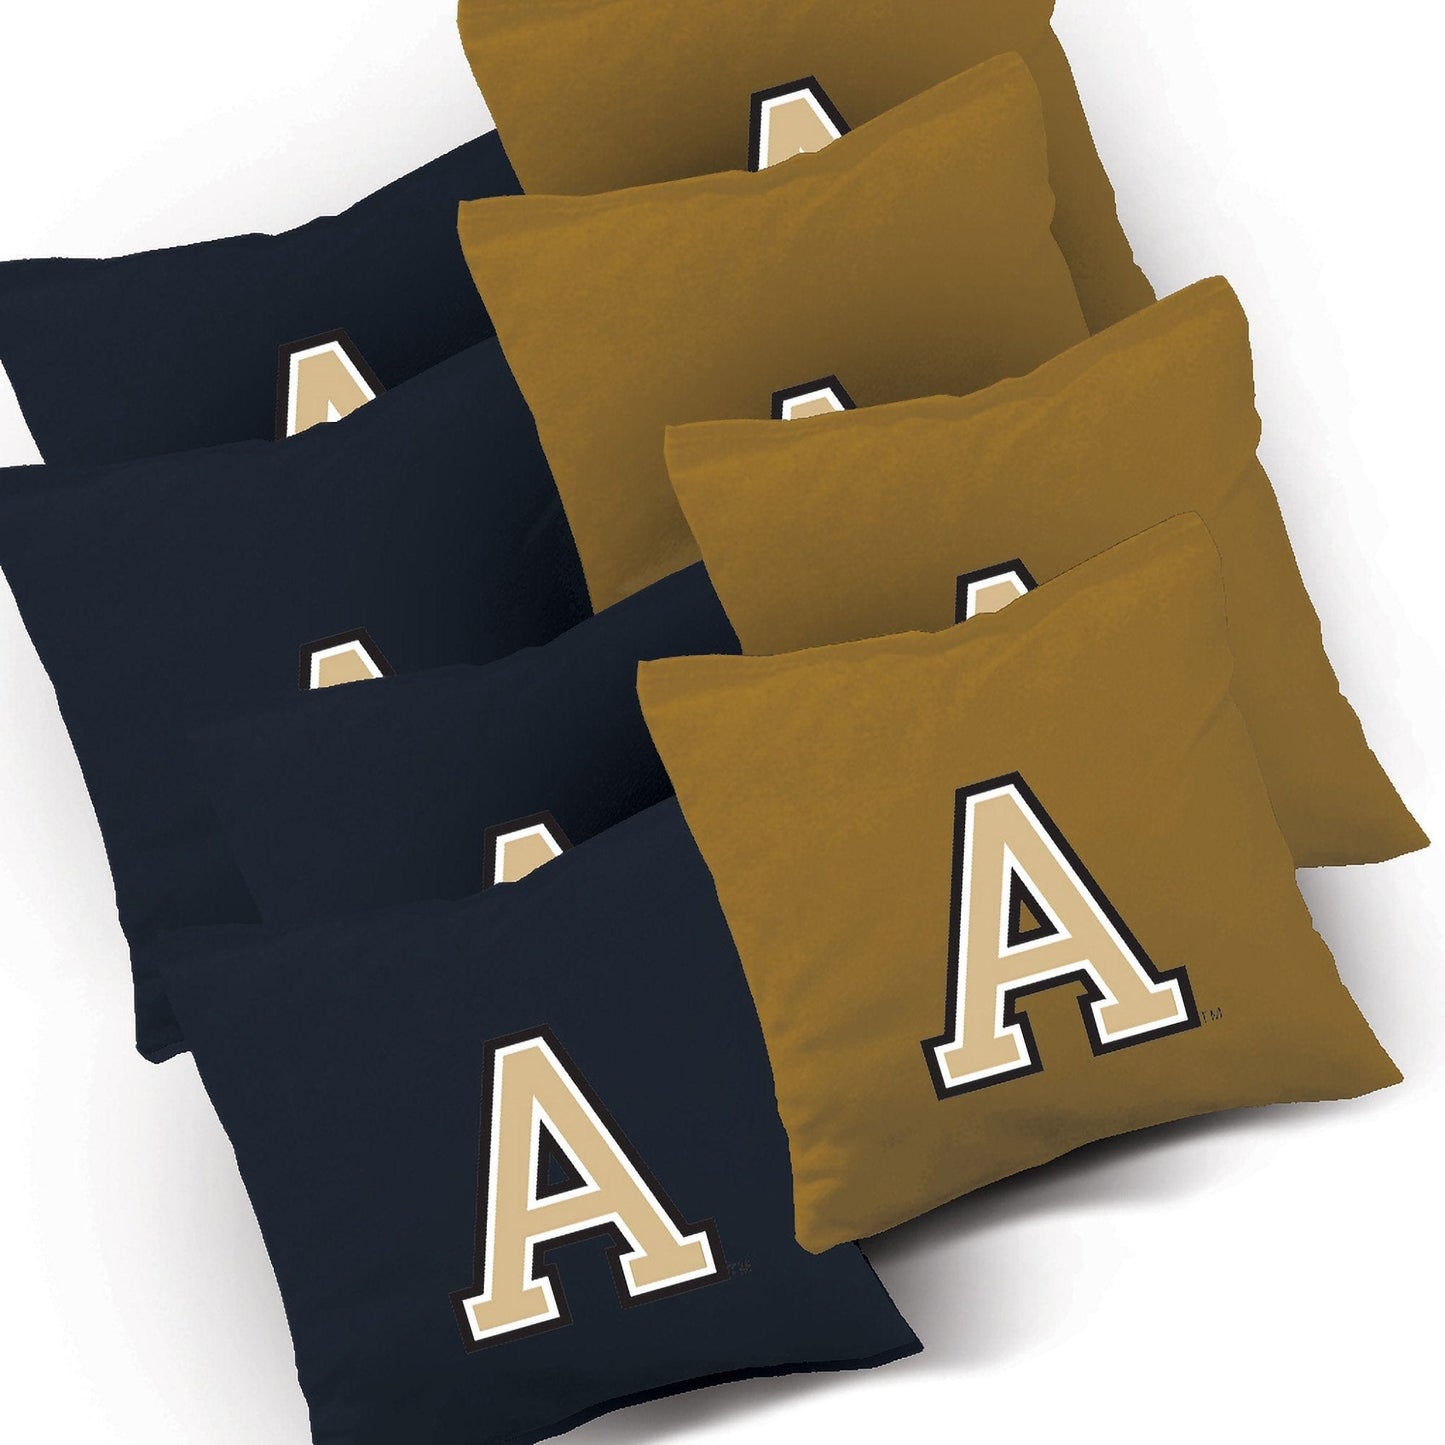 Army Black Knights Distressed team logo bags